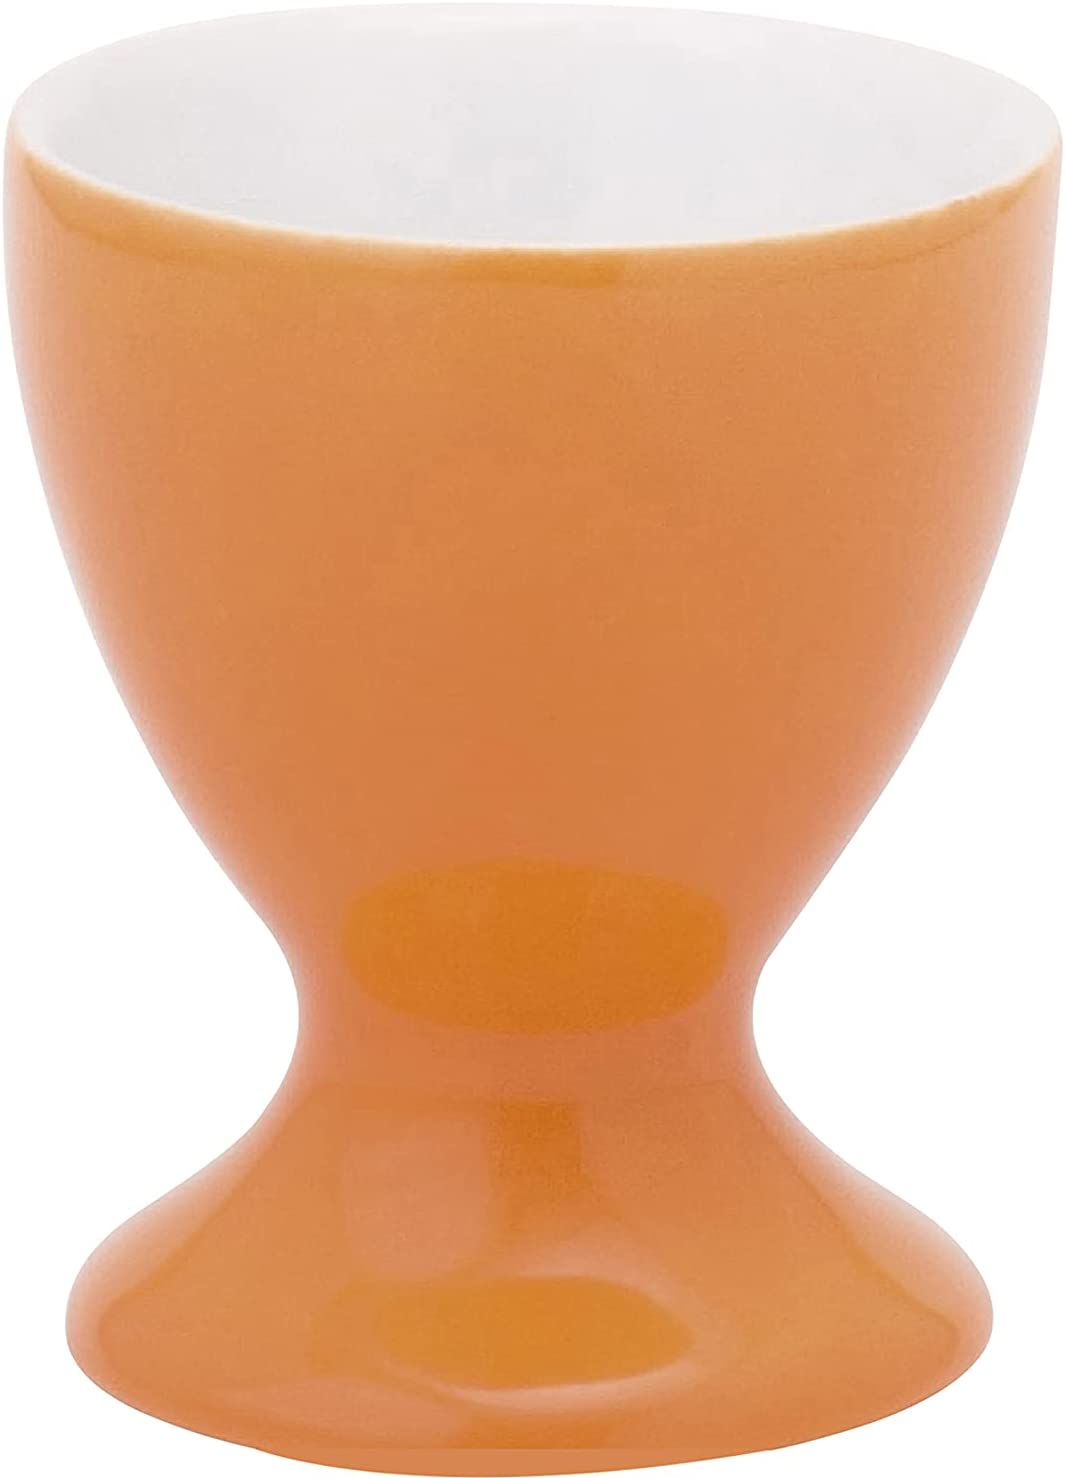 KAHLA Pronto Egg Cup With Base, Orange Color, 1 Piece